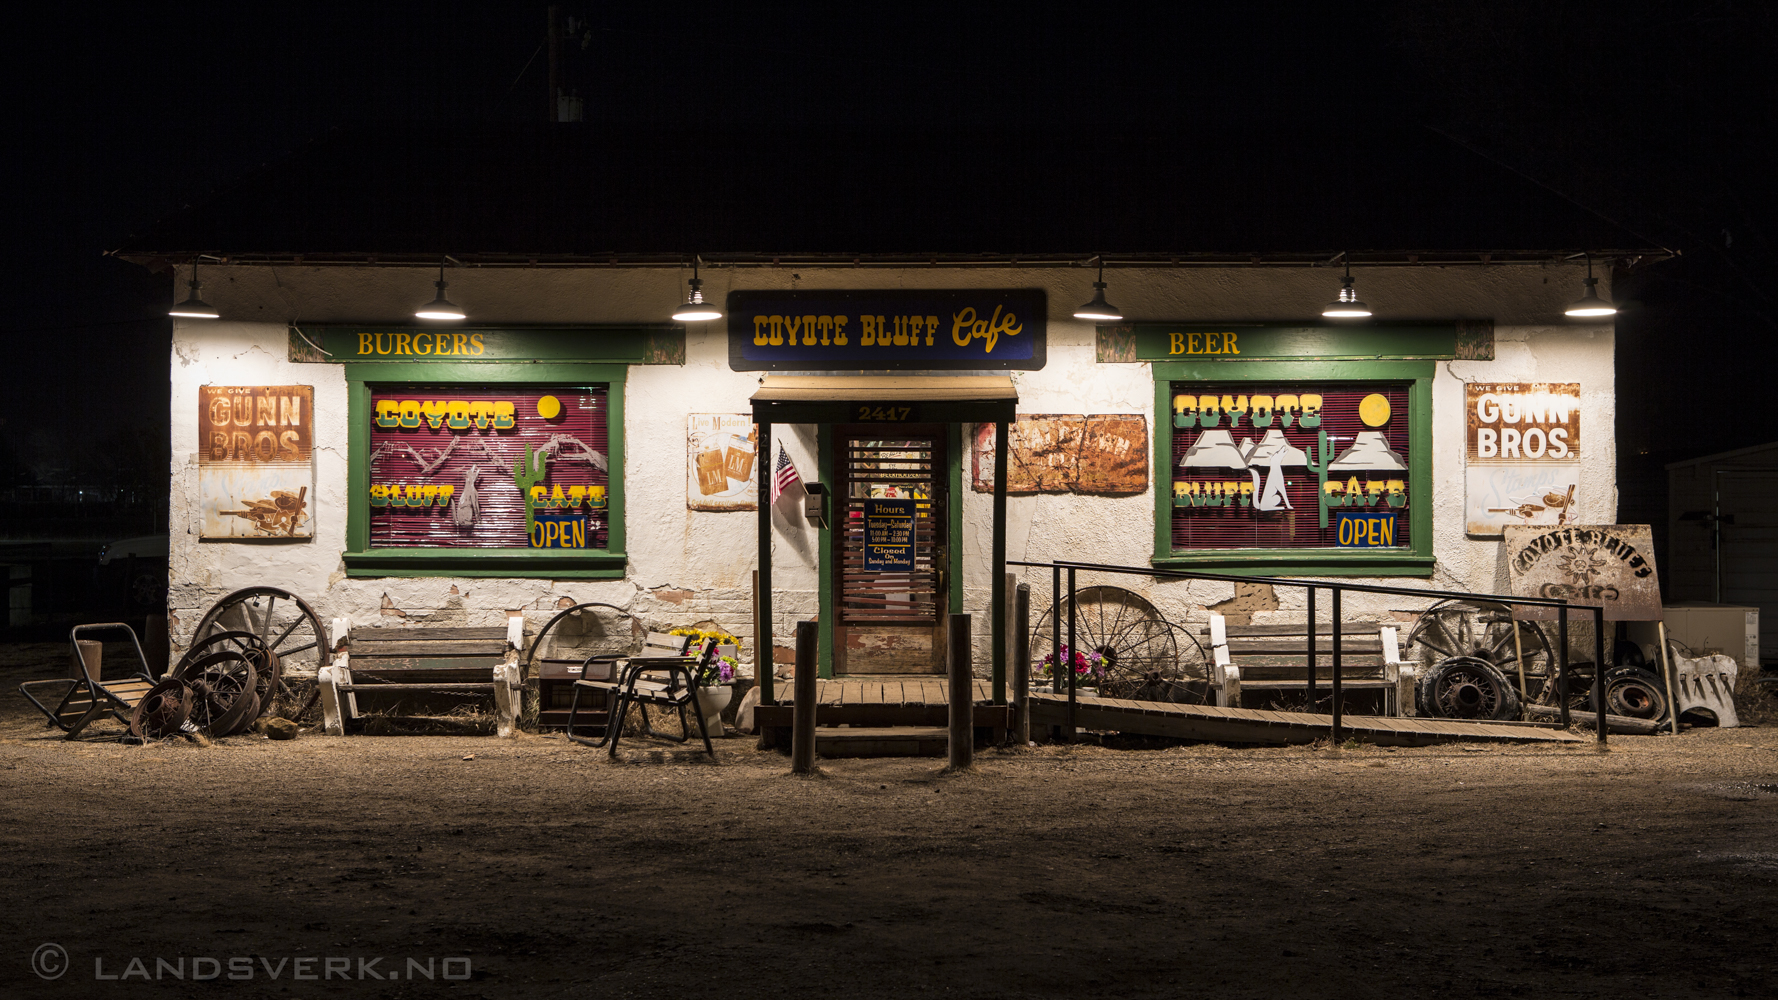 Coyote Bluff Cafe, Amarillo, Texas. 

(Canon EOS 5D Mark III / Canon EF 24-70mm f/2.8 L USM